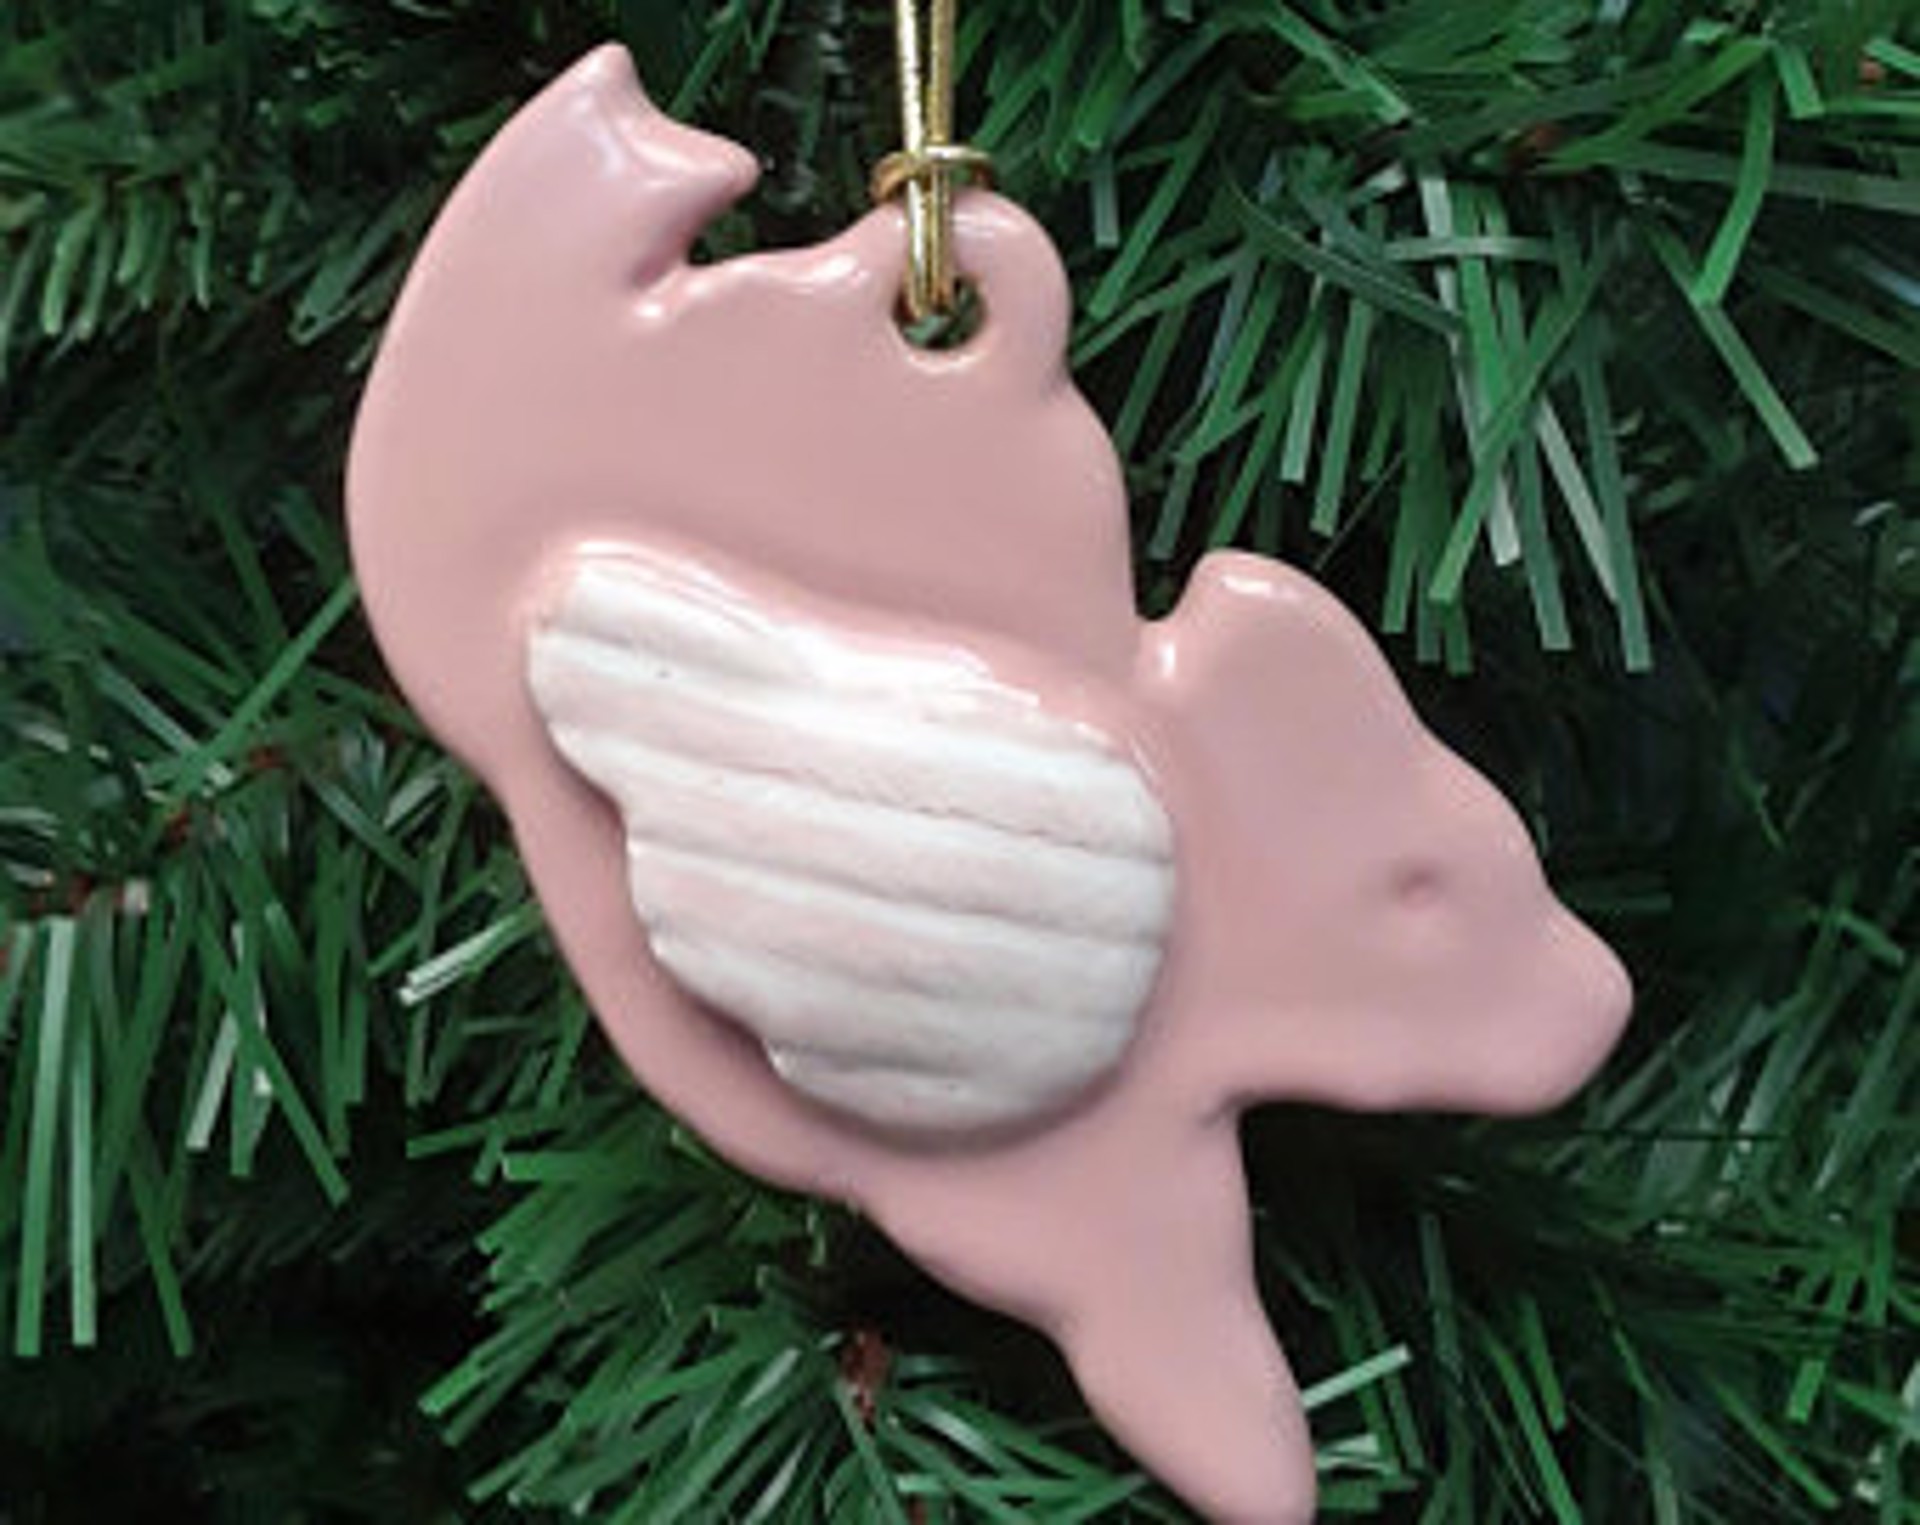 Ornament "Ham It Up" by Lin Barnhardt